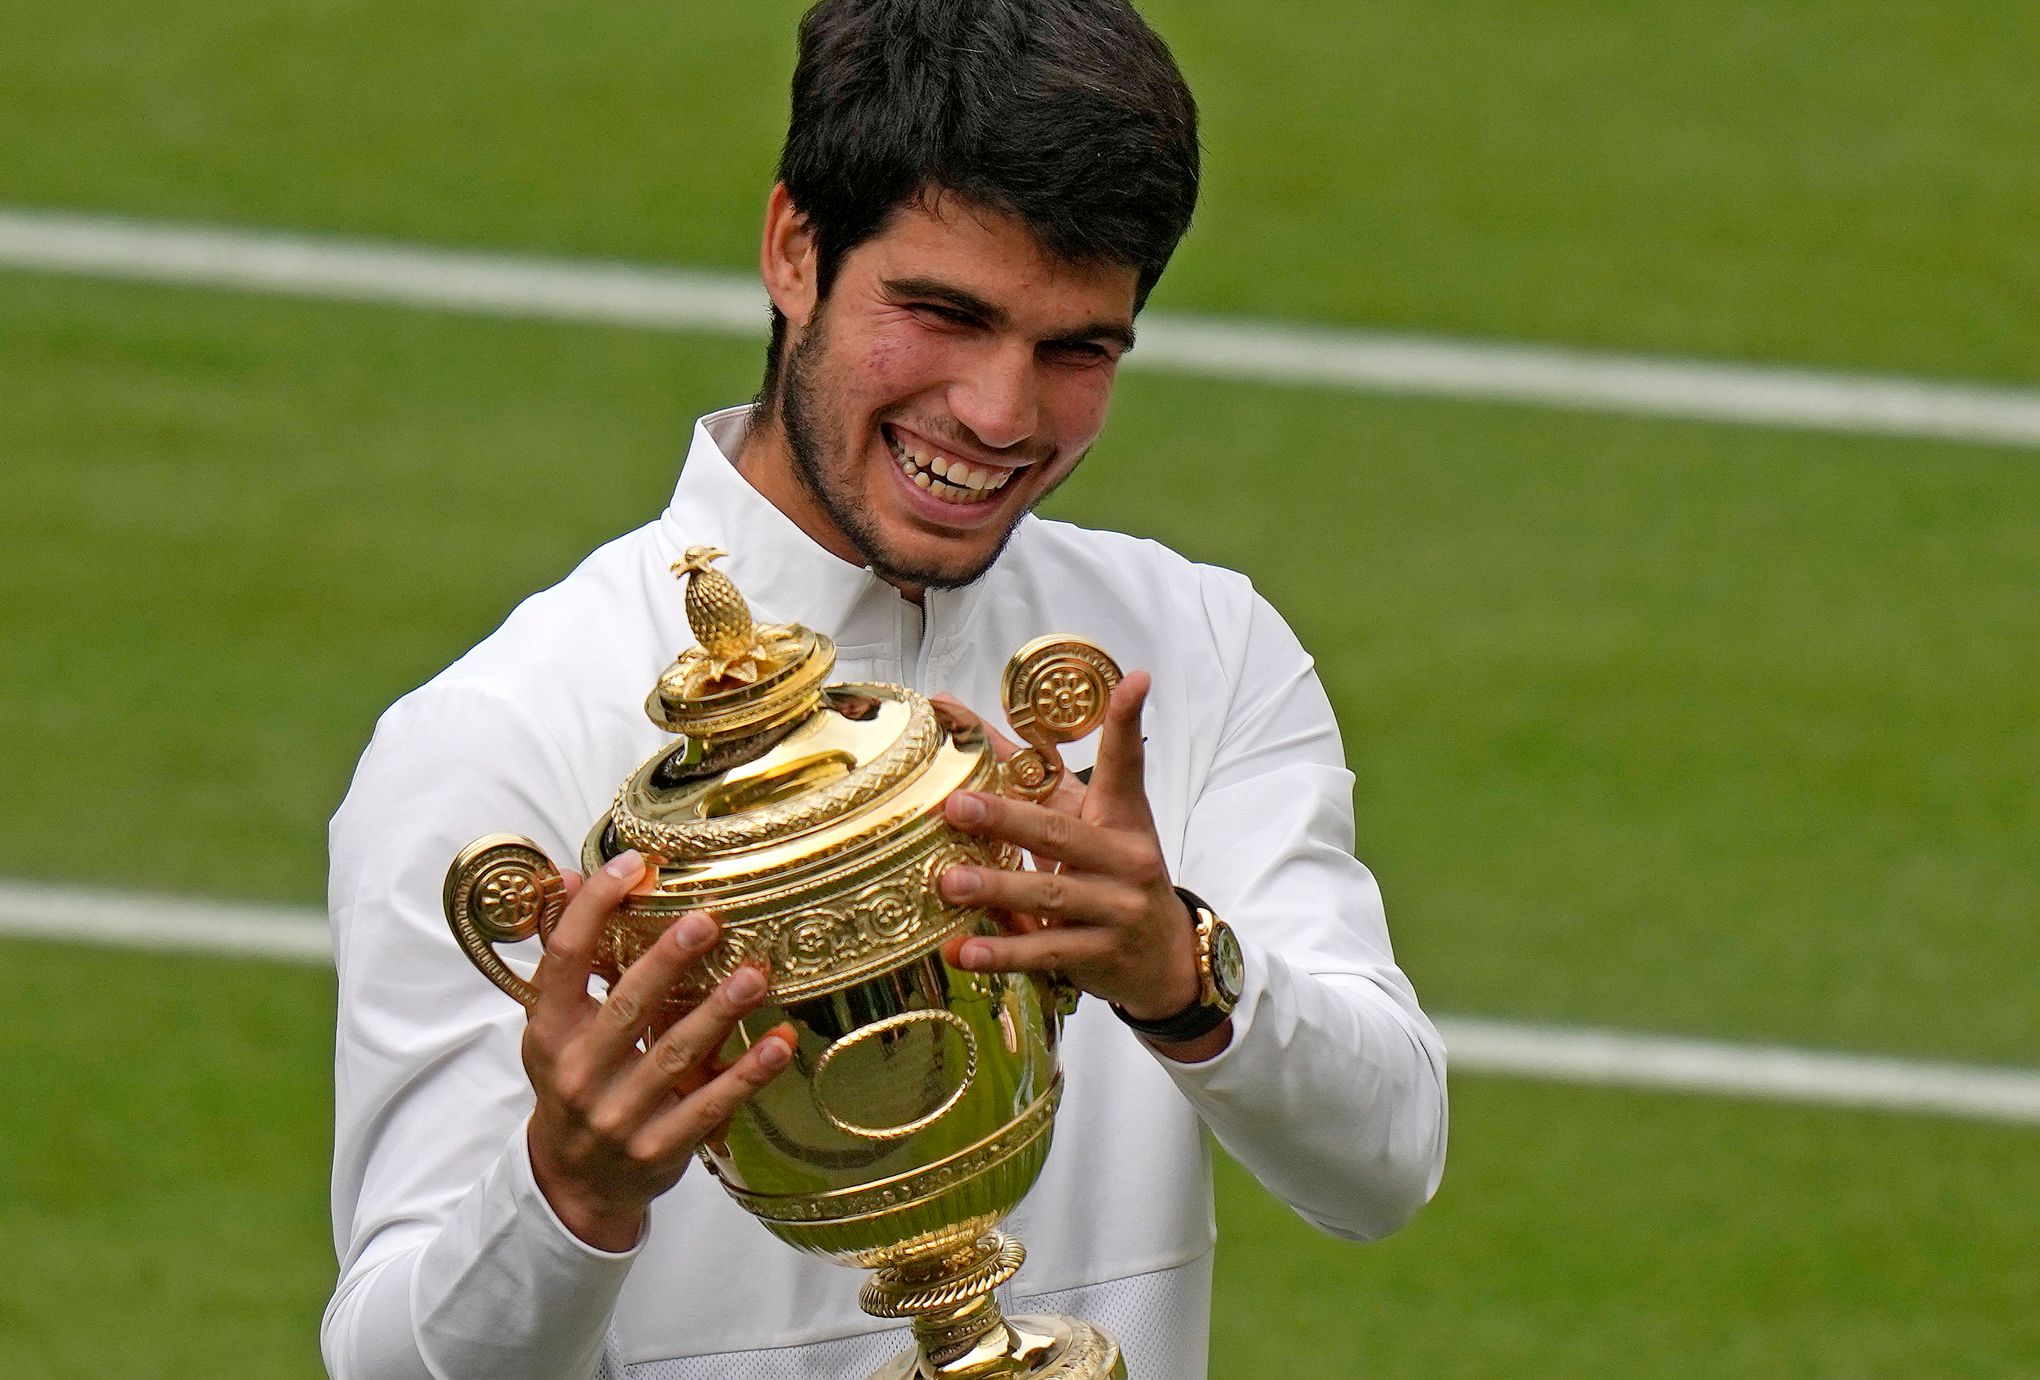 Carlos Alcaraz ends Novak Djokovic's long Wimbledon reign in 5-set